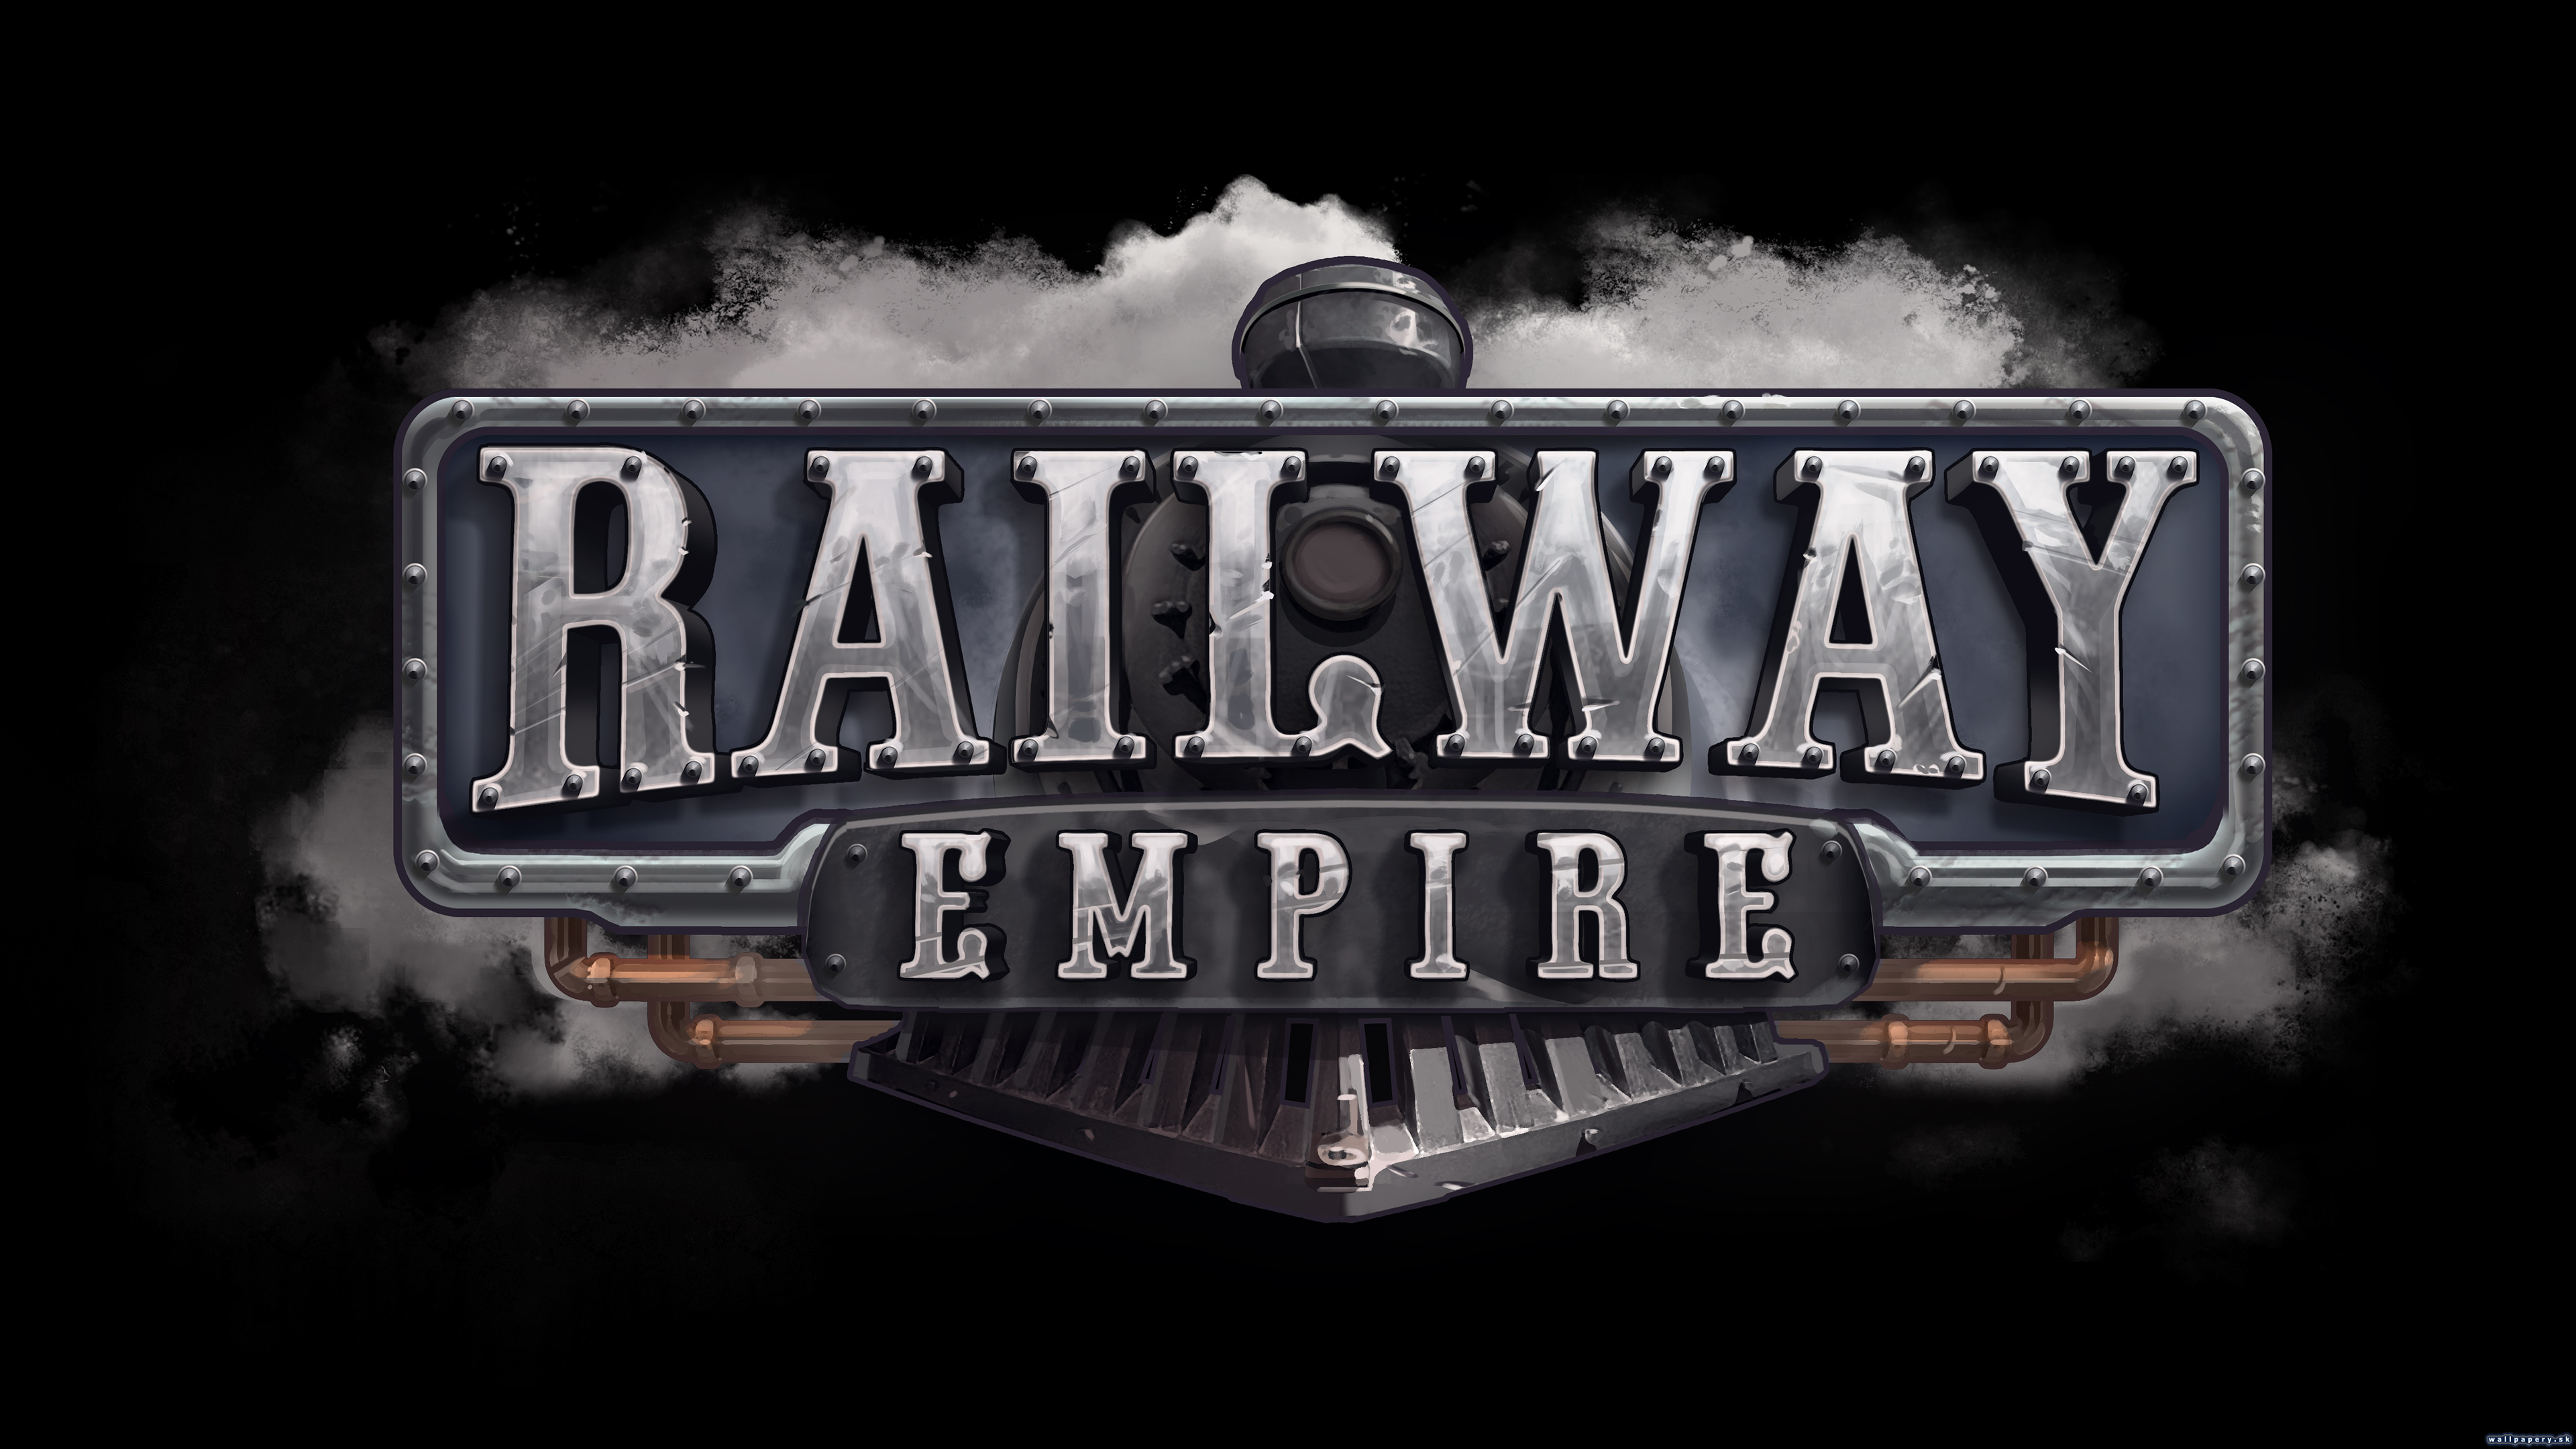 Railway Empire - wallpaper 2